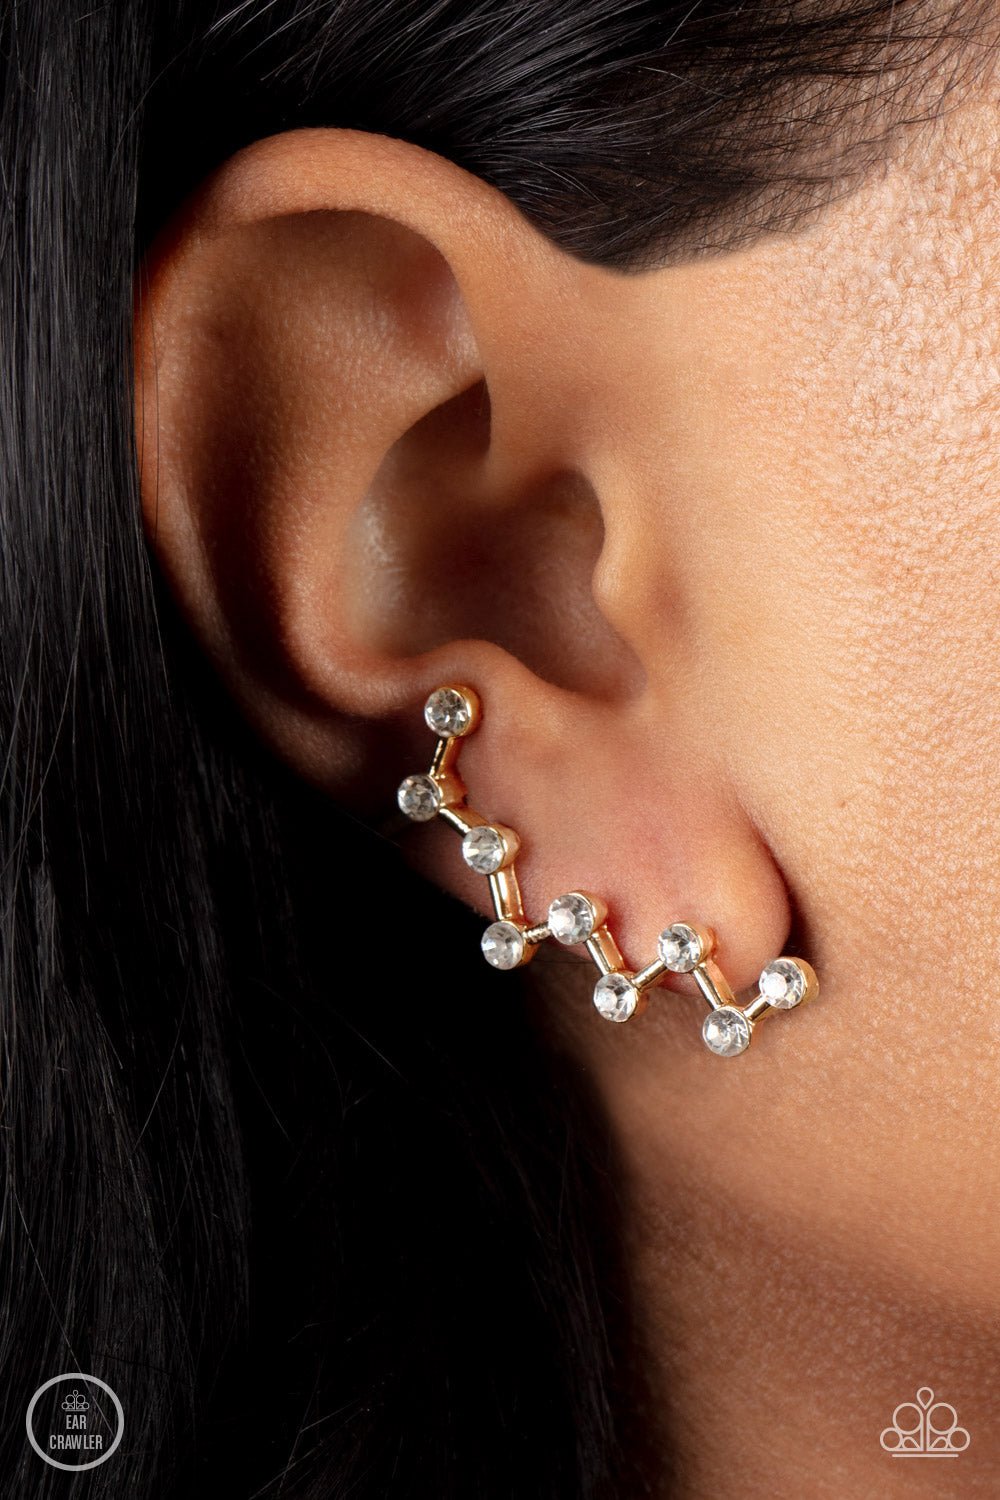 Clamoring Constellations Gold Ear Crawler Earrings - Jewelry by Bretta